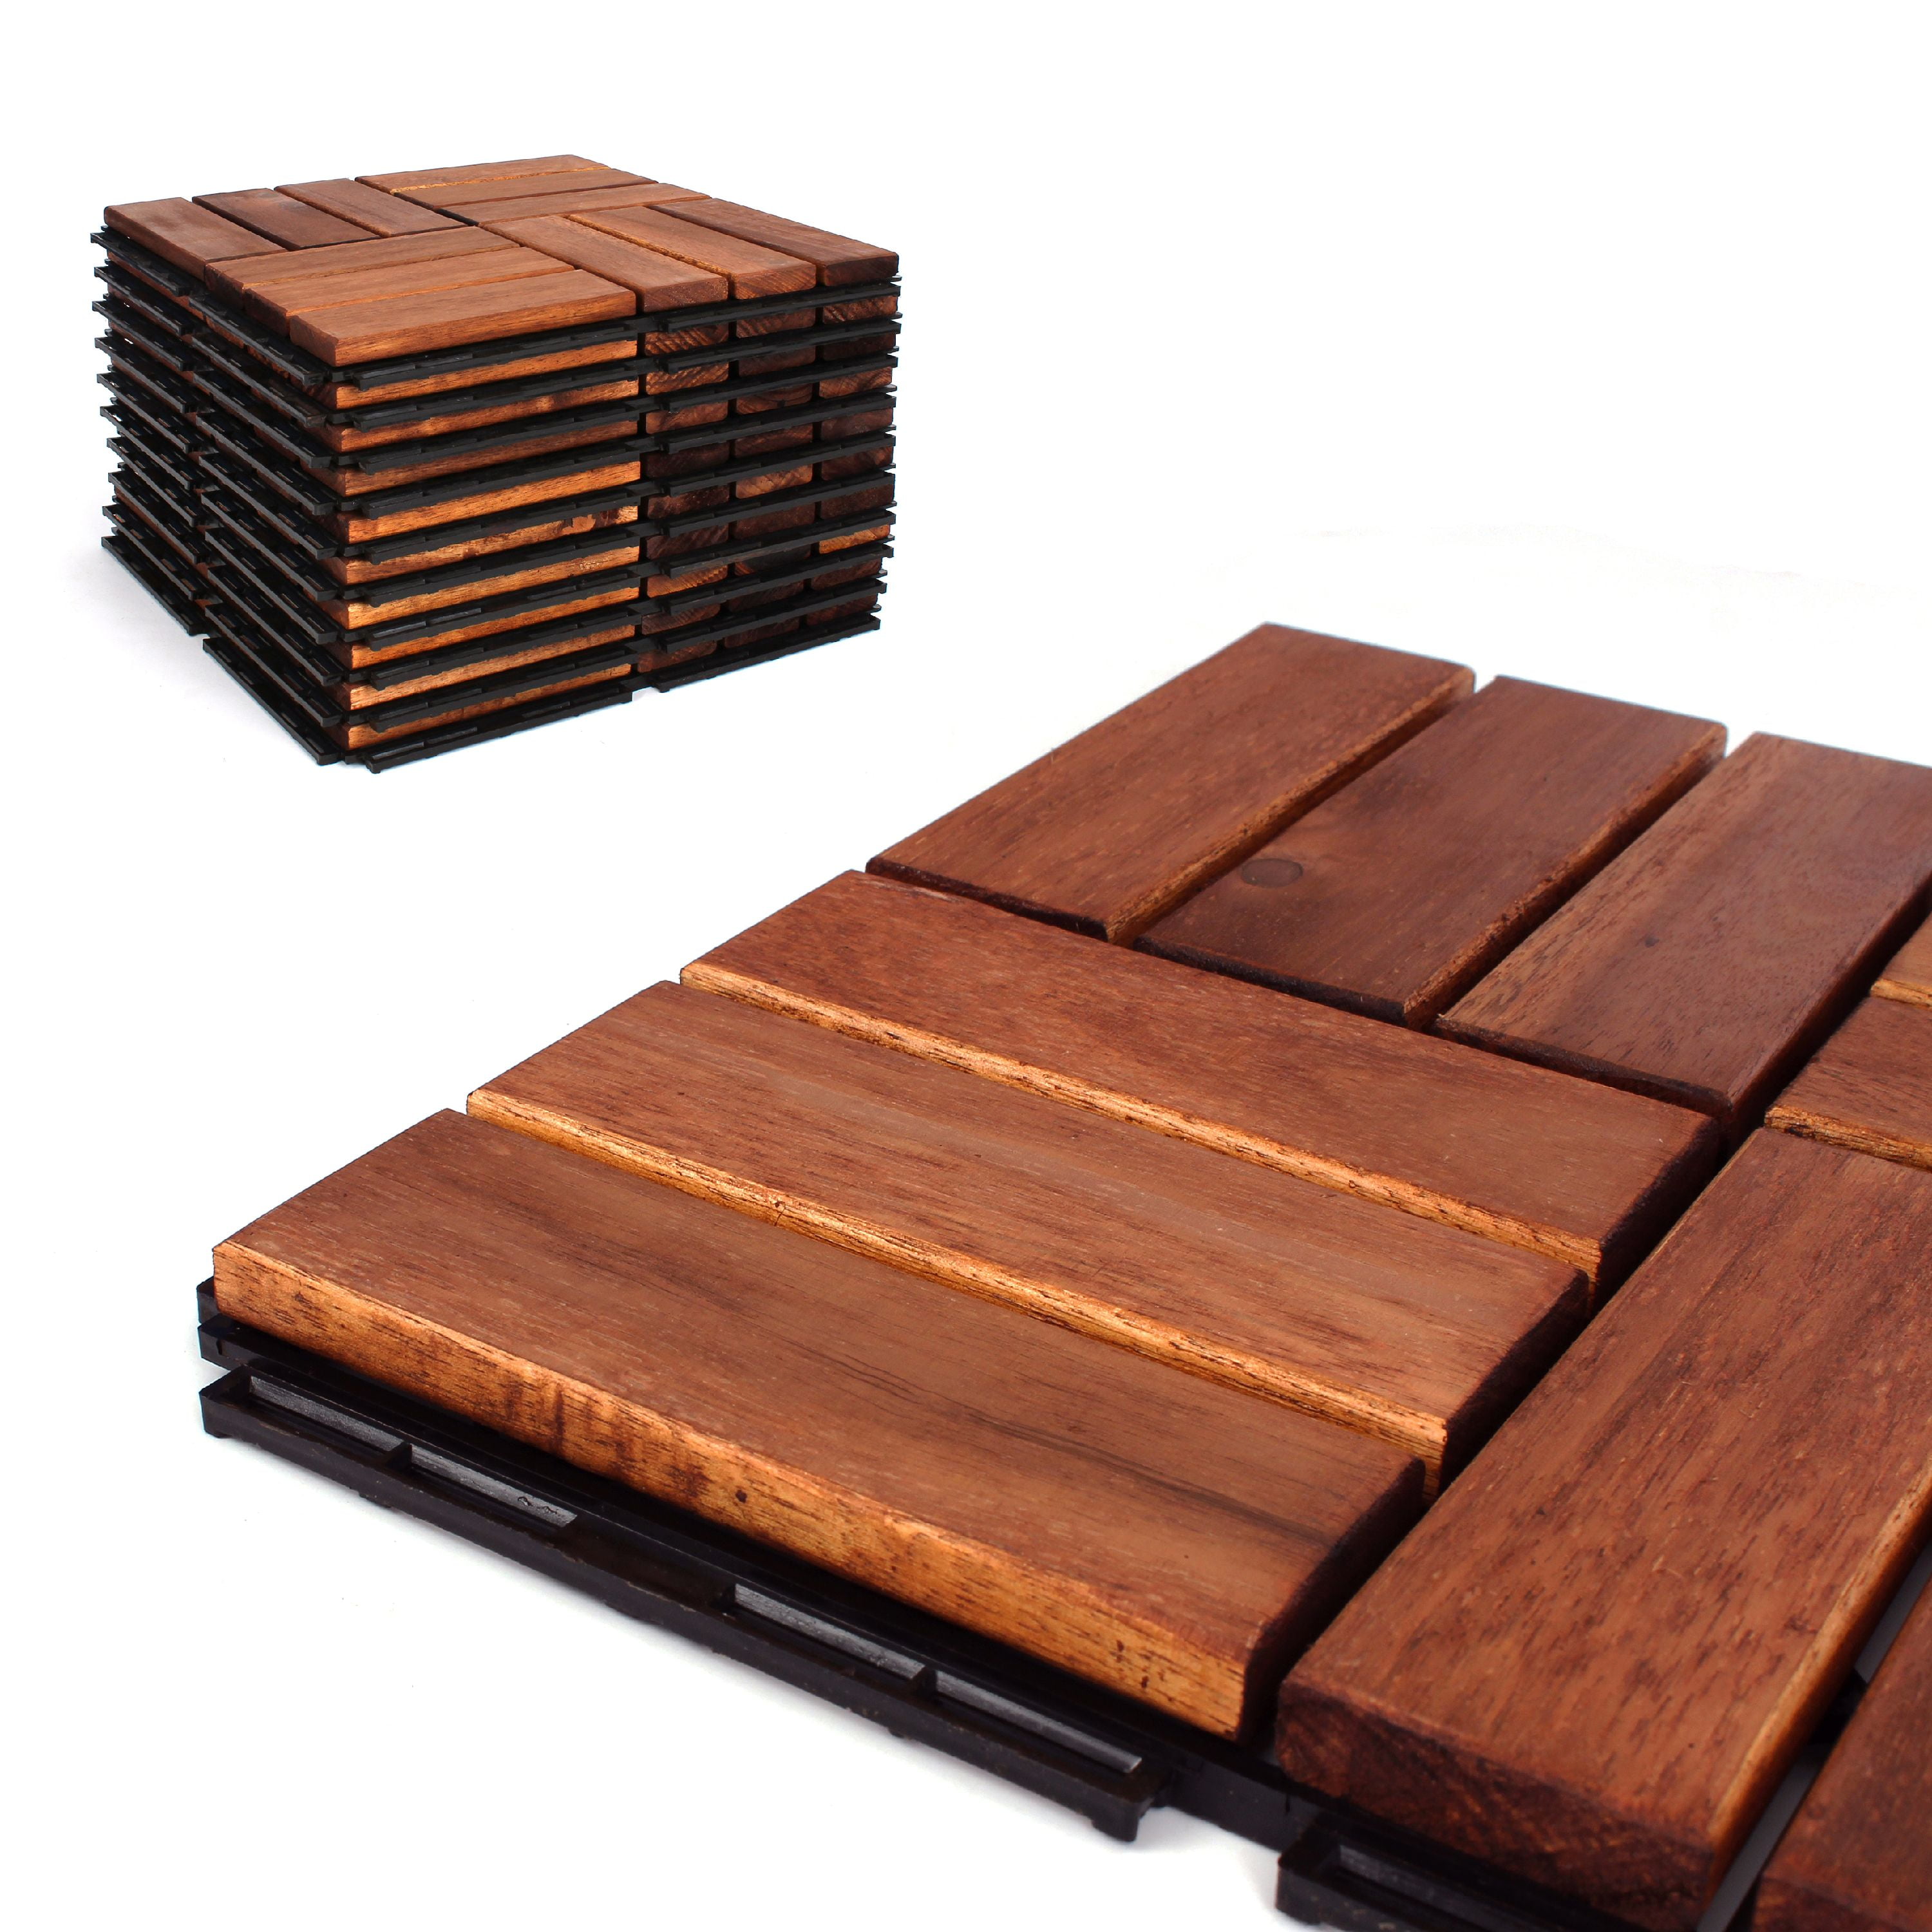 Deck Tiles Patio Pavers Acacia Wood, Wooden Decking Floor Interlocking Tiles